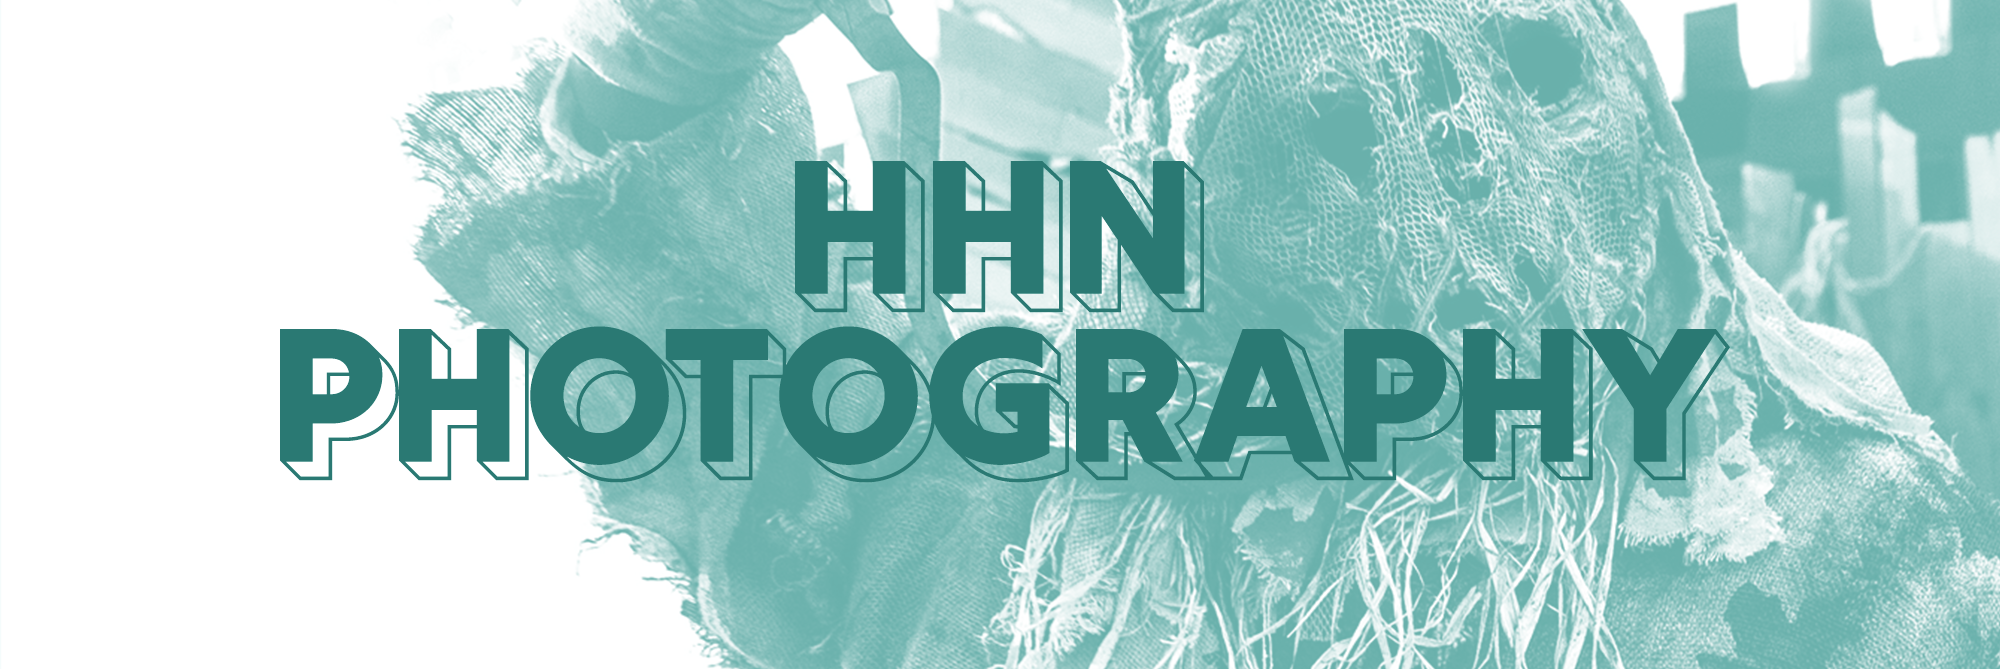 HHN Photography Bannner